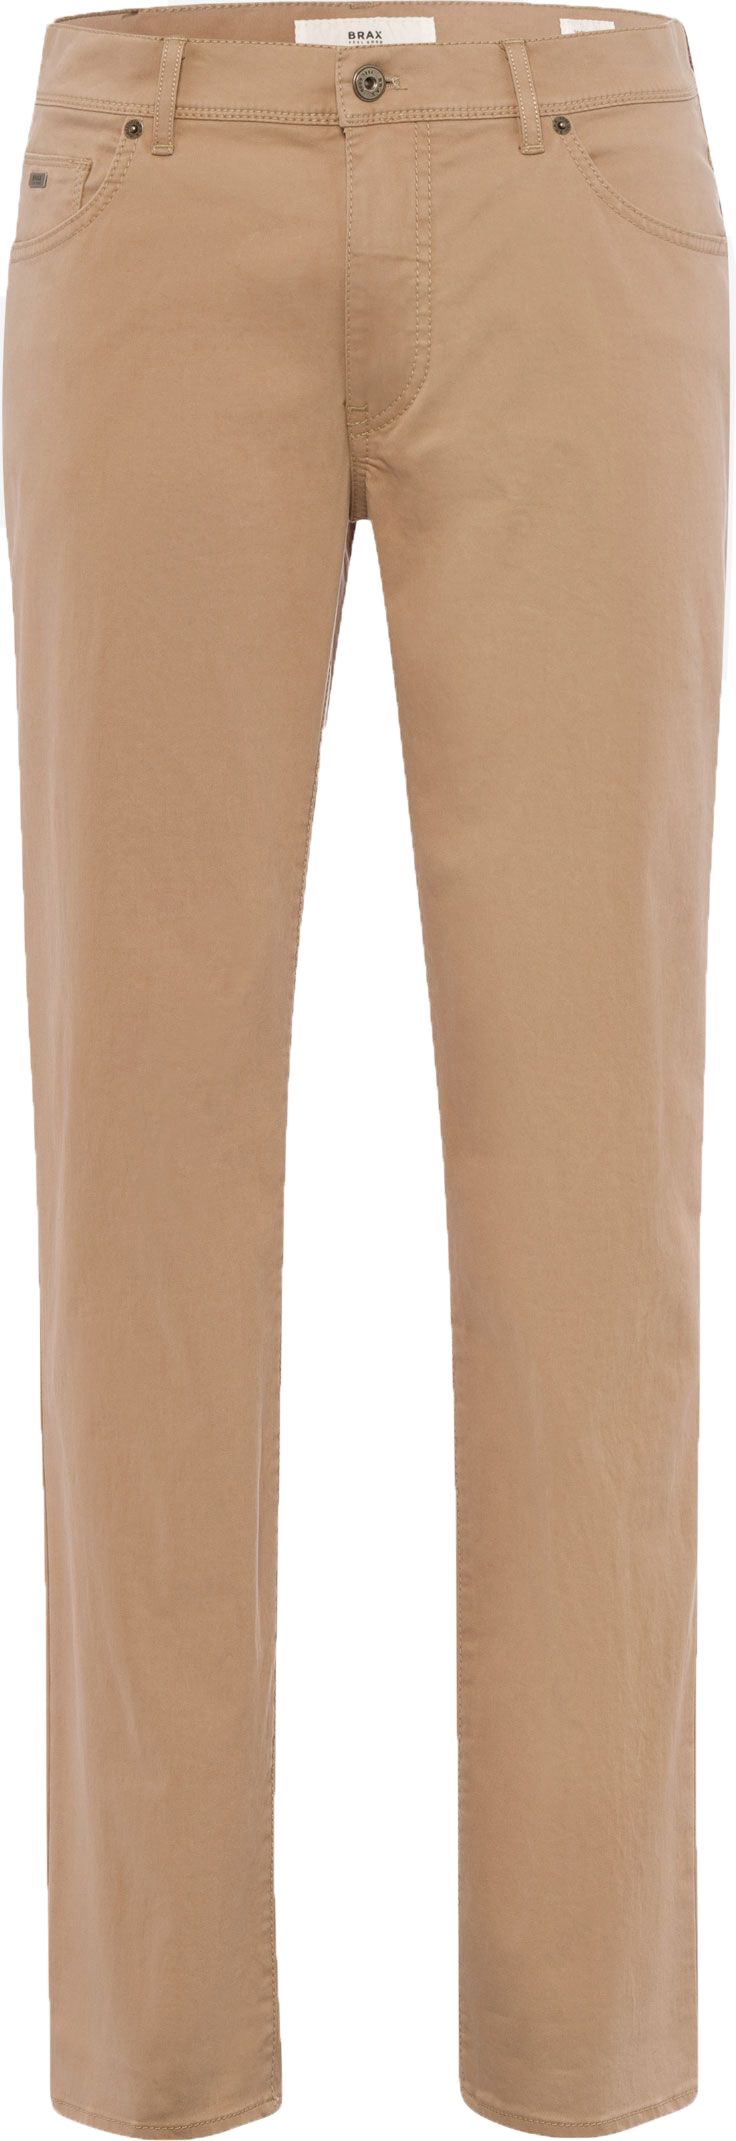 Brax Cadiz Regular Fit Pants Beige size W 31